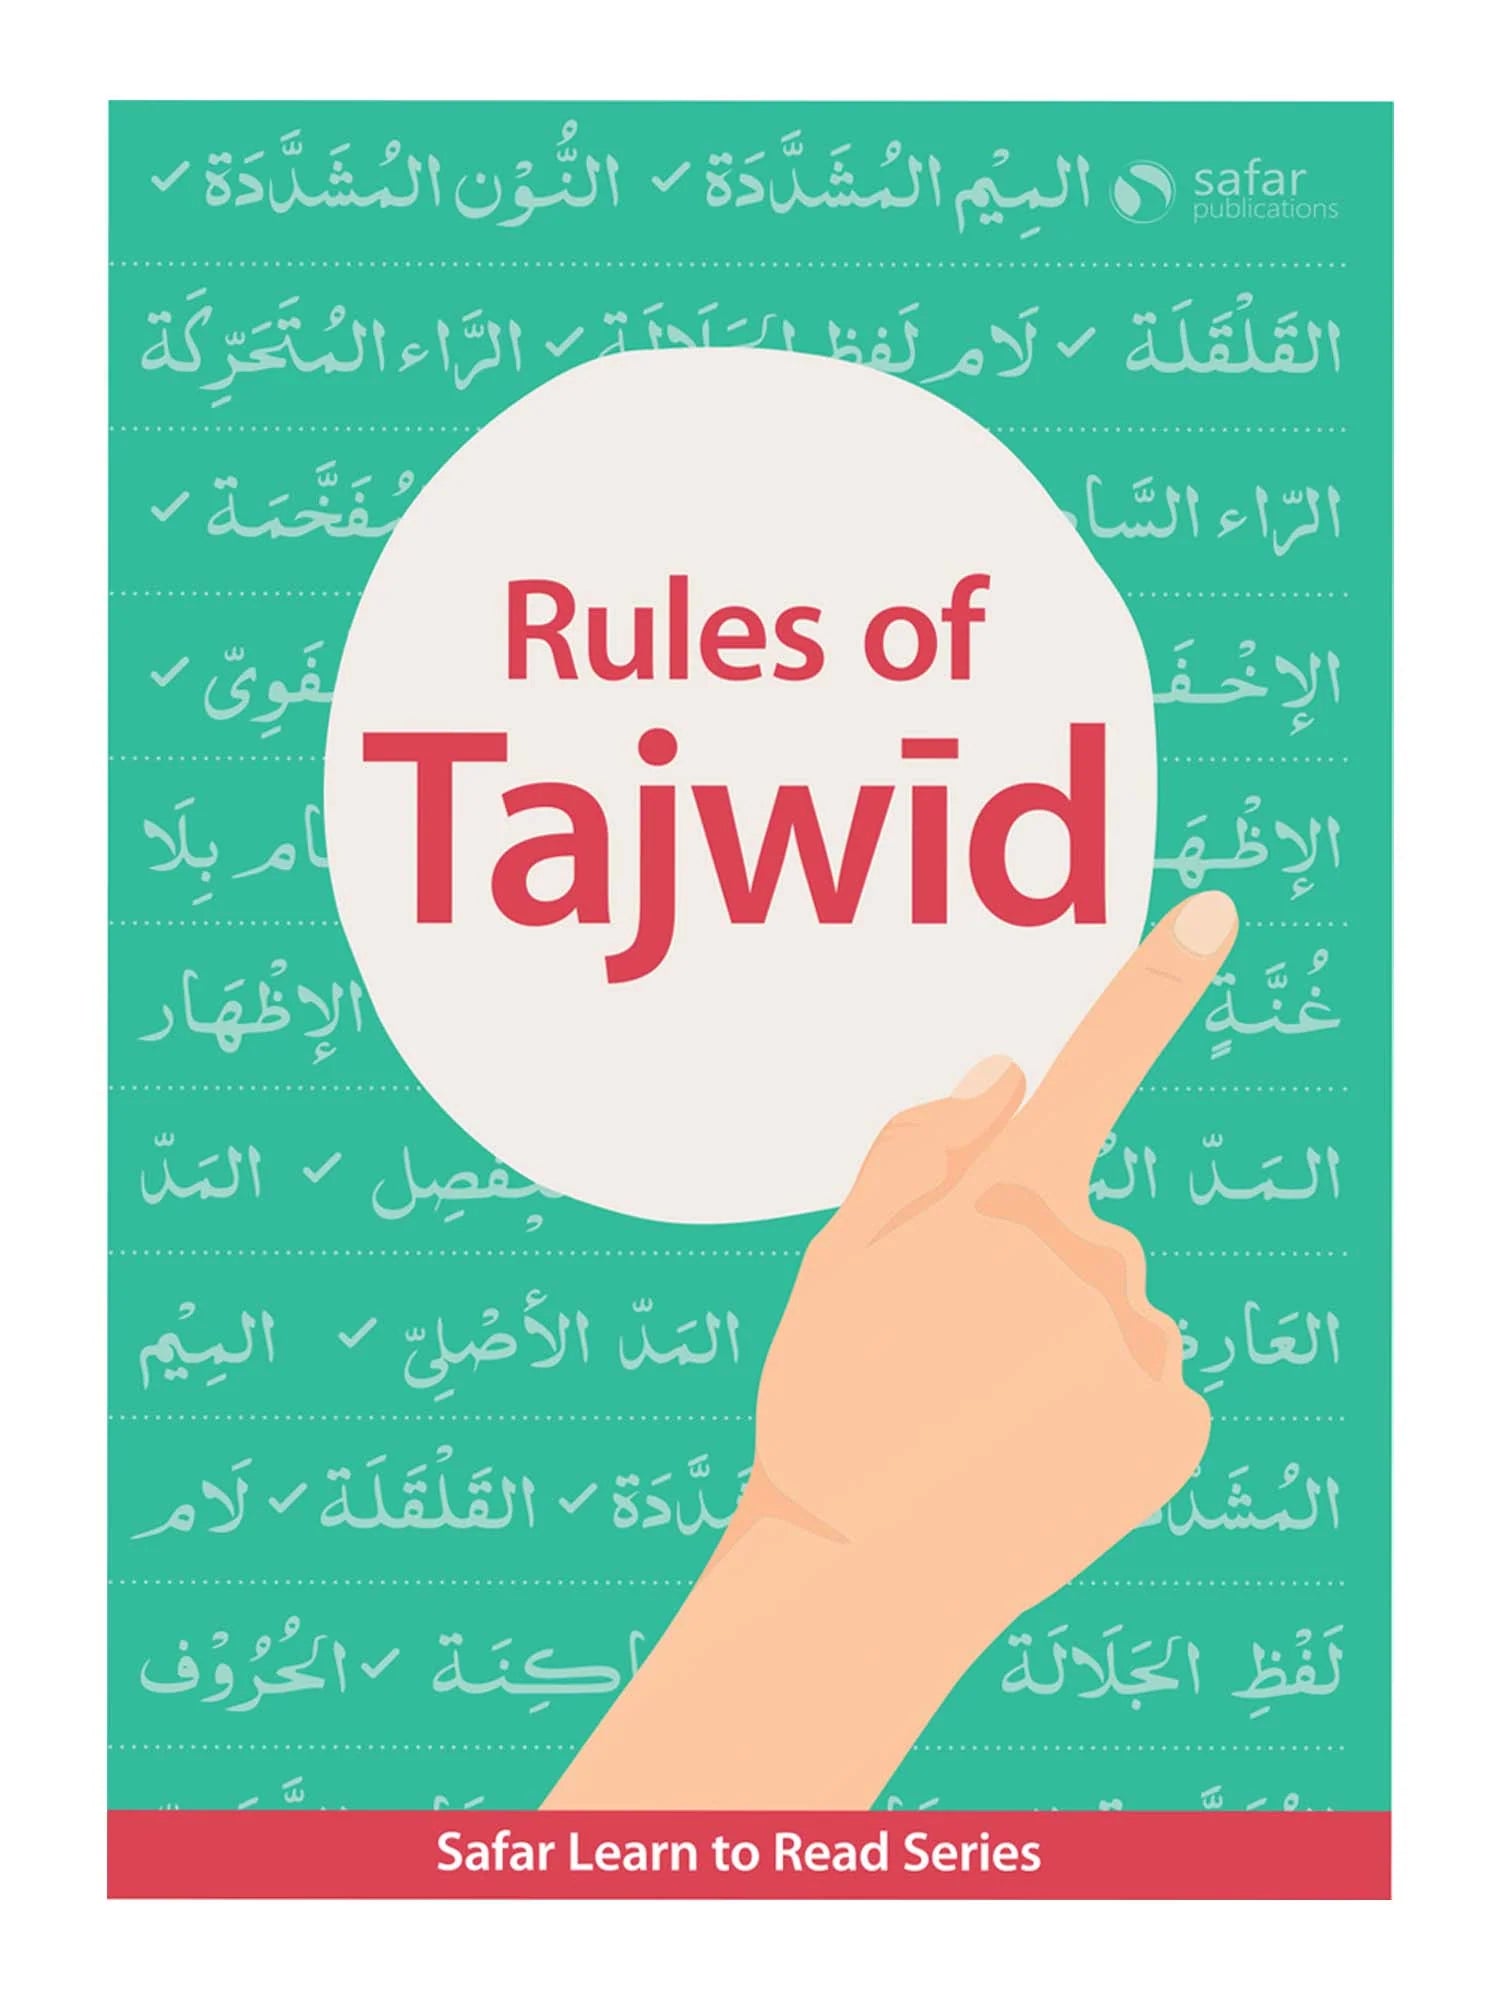 Rules of Tajwid (Urdu Script)